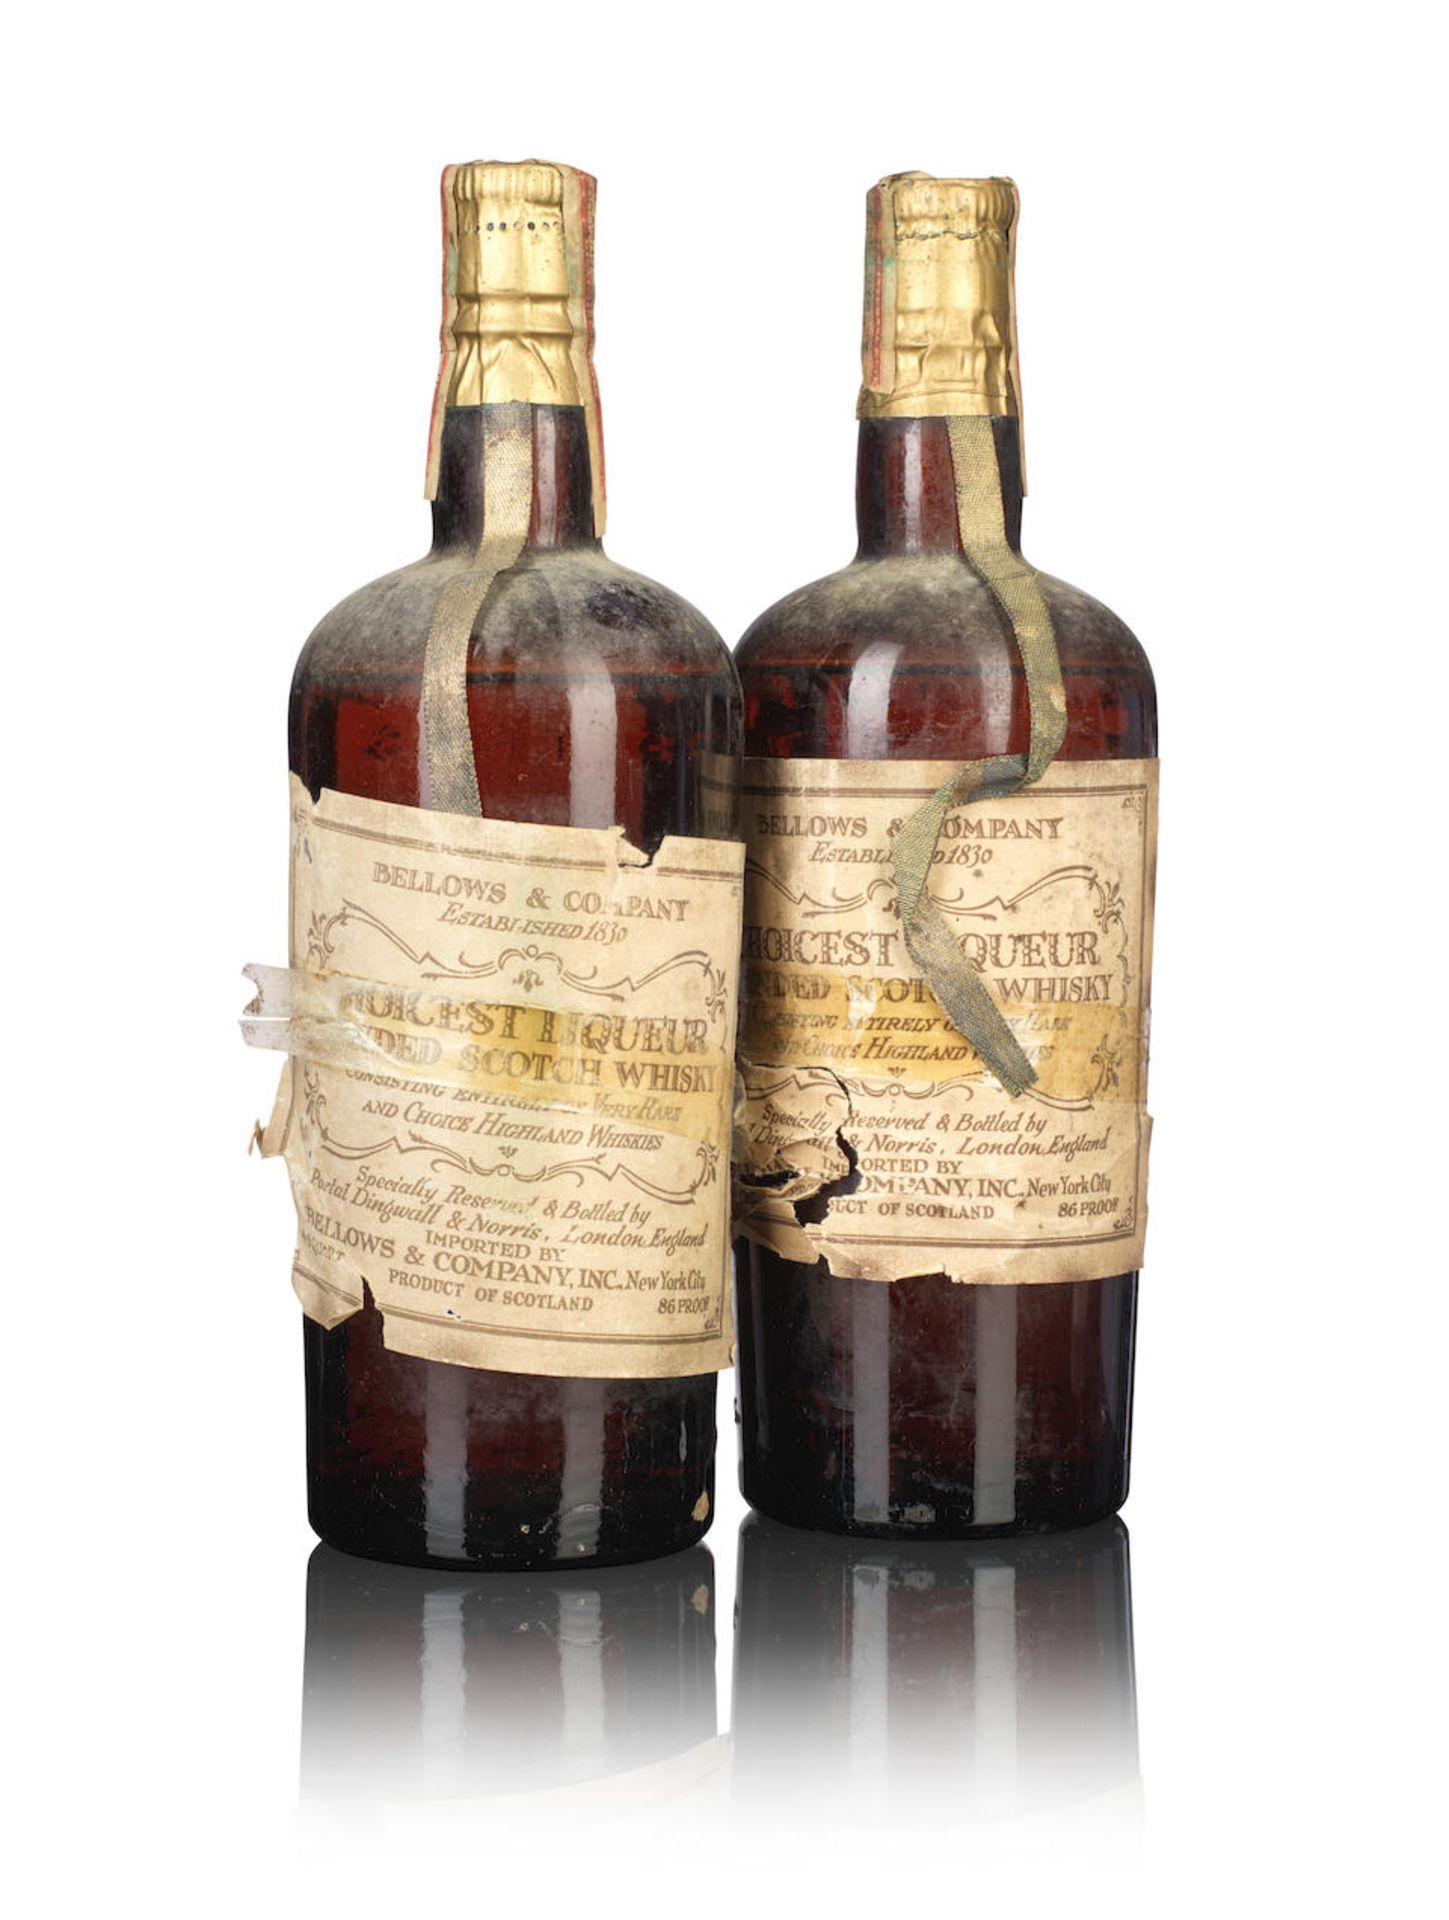 Bellows & Company Choicest Liqueurs Scotch Whisky (2)